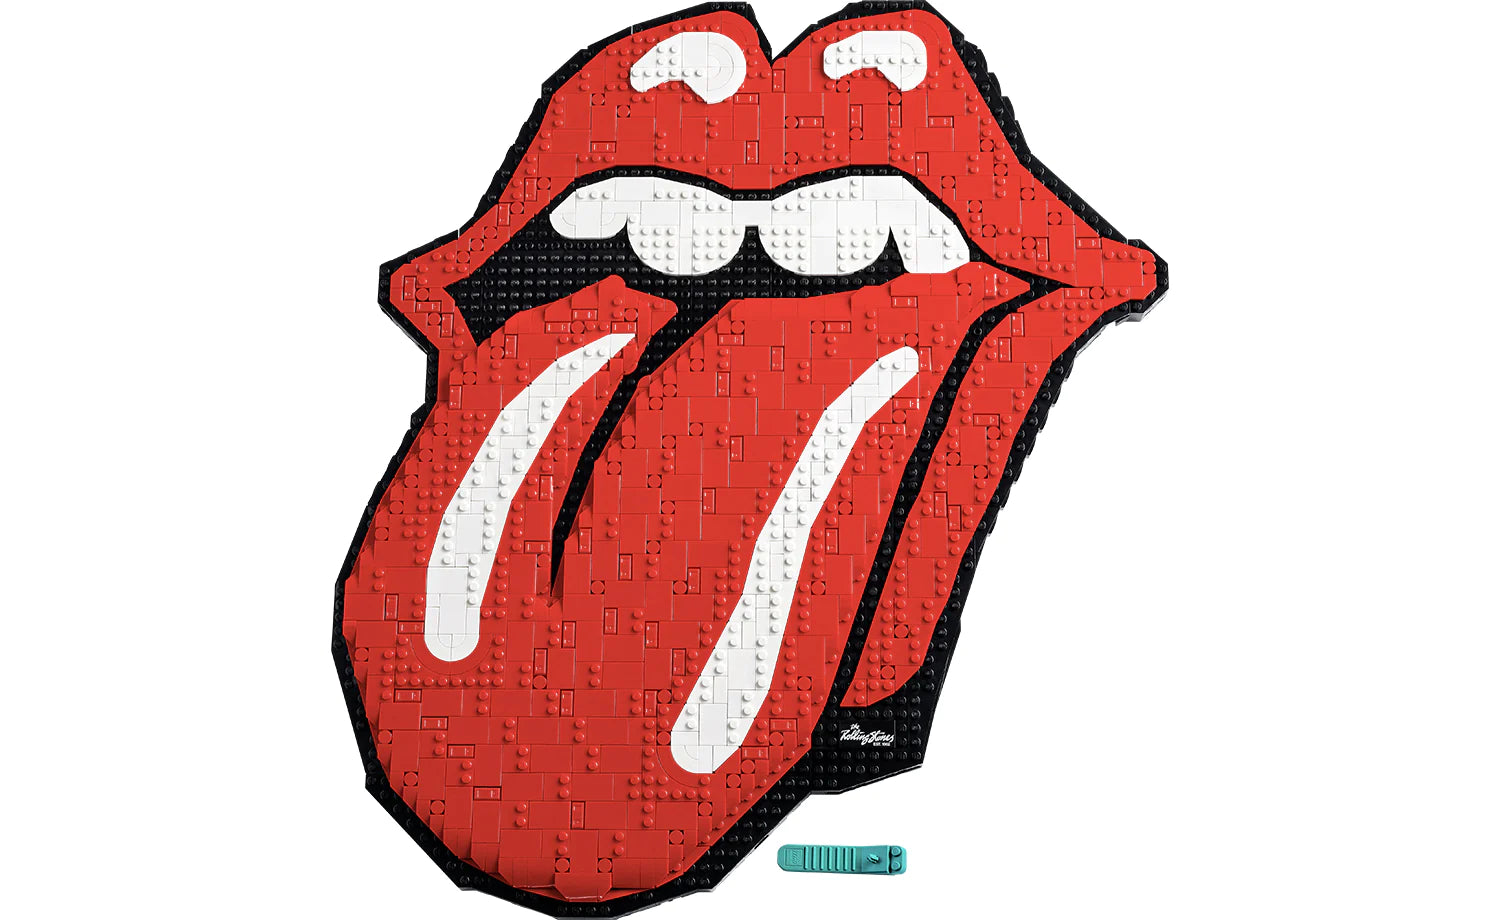 Handmade, Office, Rolling Stones Logo Pixel Art Magnet